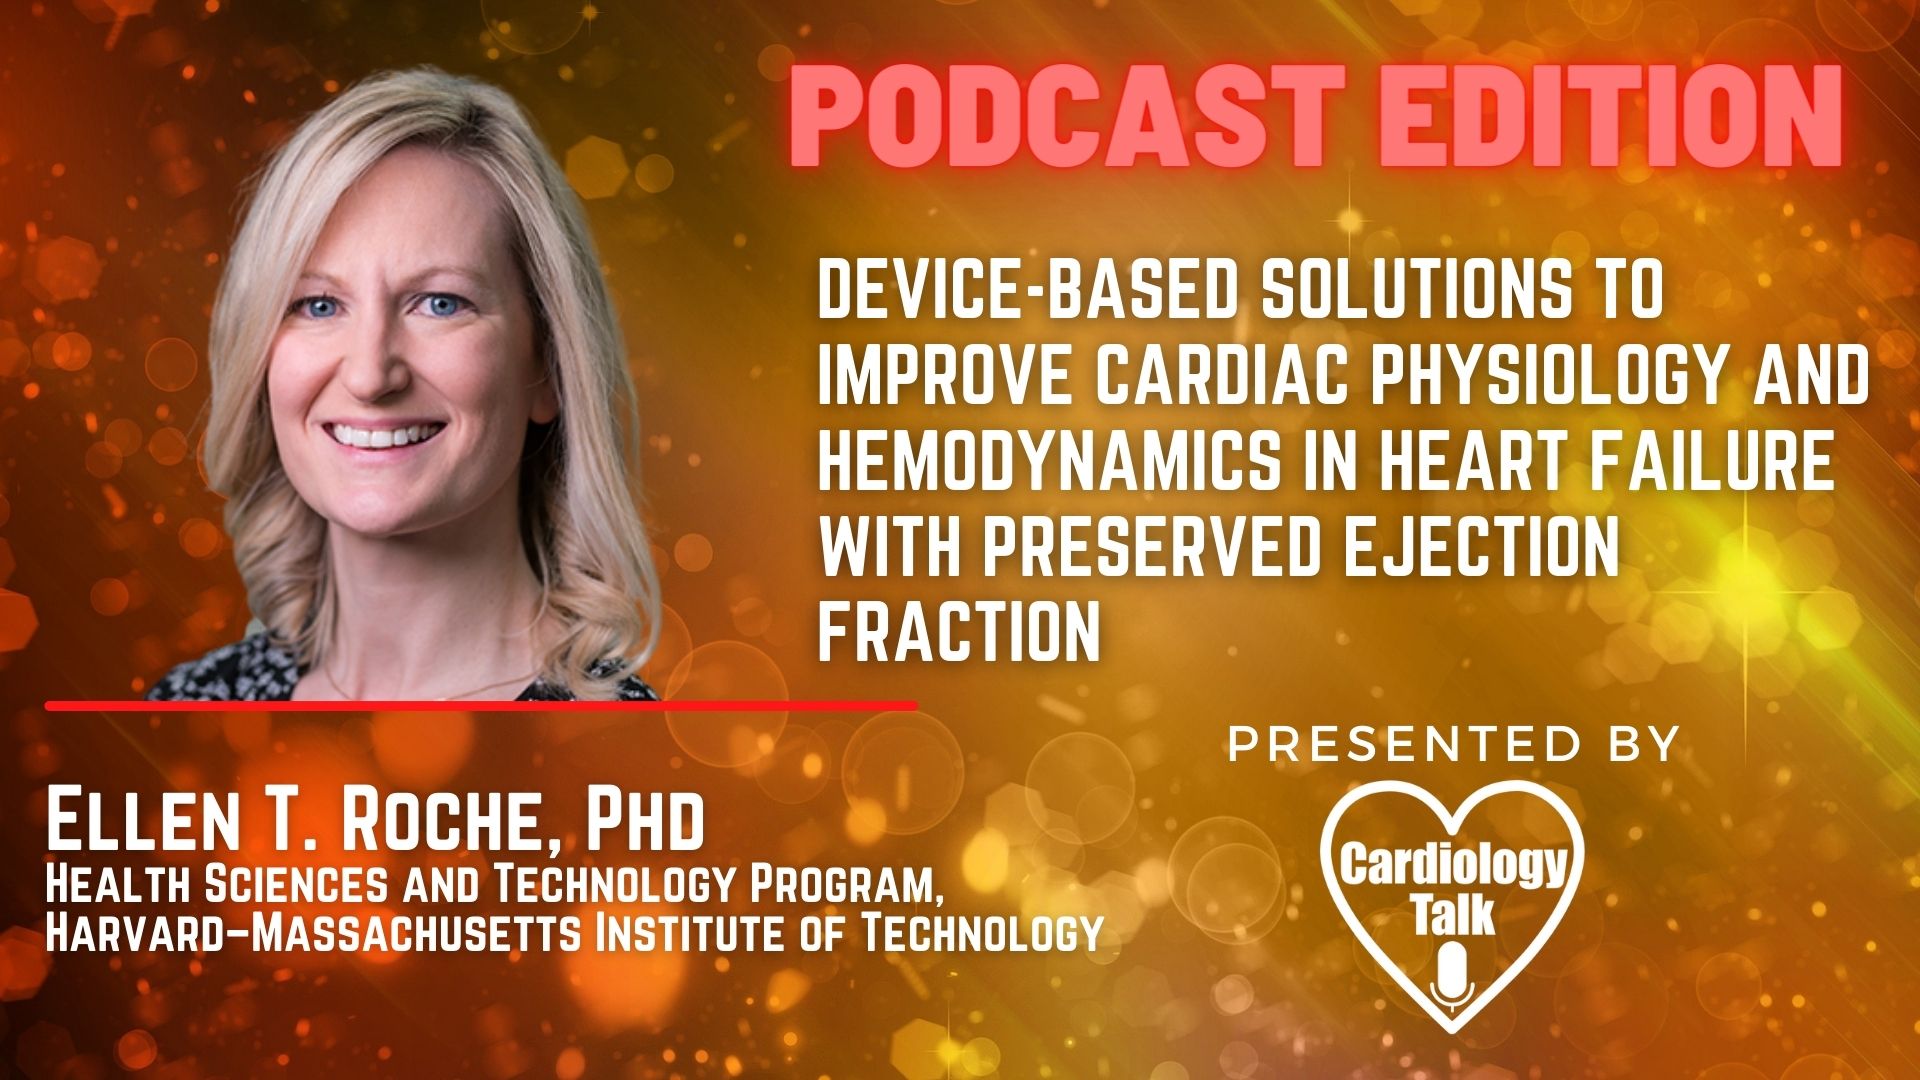 Podcast- Ellen T. Roche, PHD- #MIT #massachusettsinstituteoftechnology # CardiacPhysiology #Hemodynamics #HeartFailure #Cardiology #Research